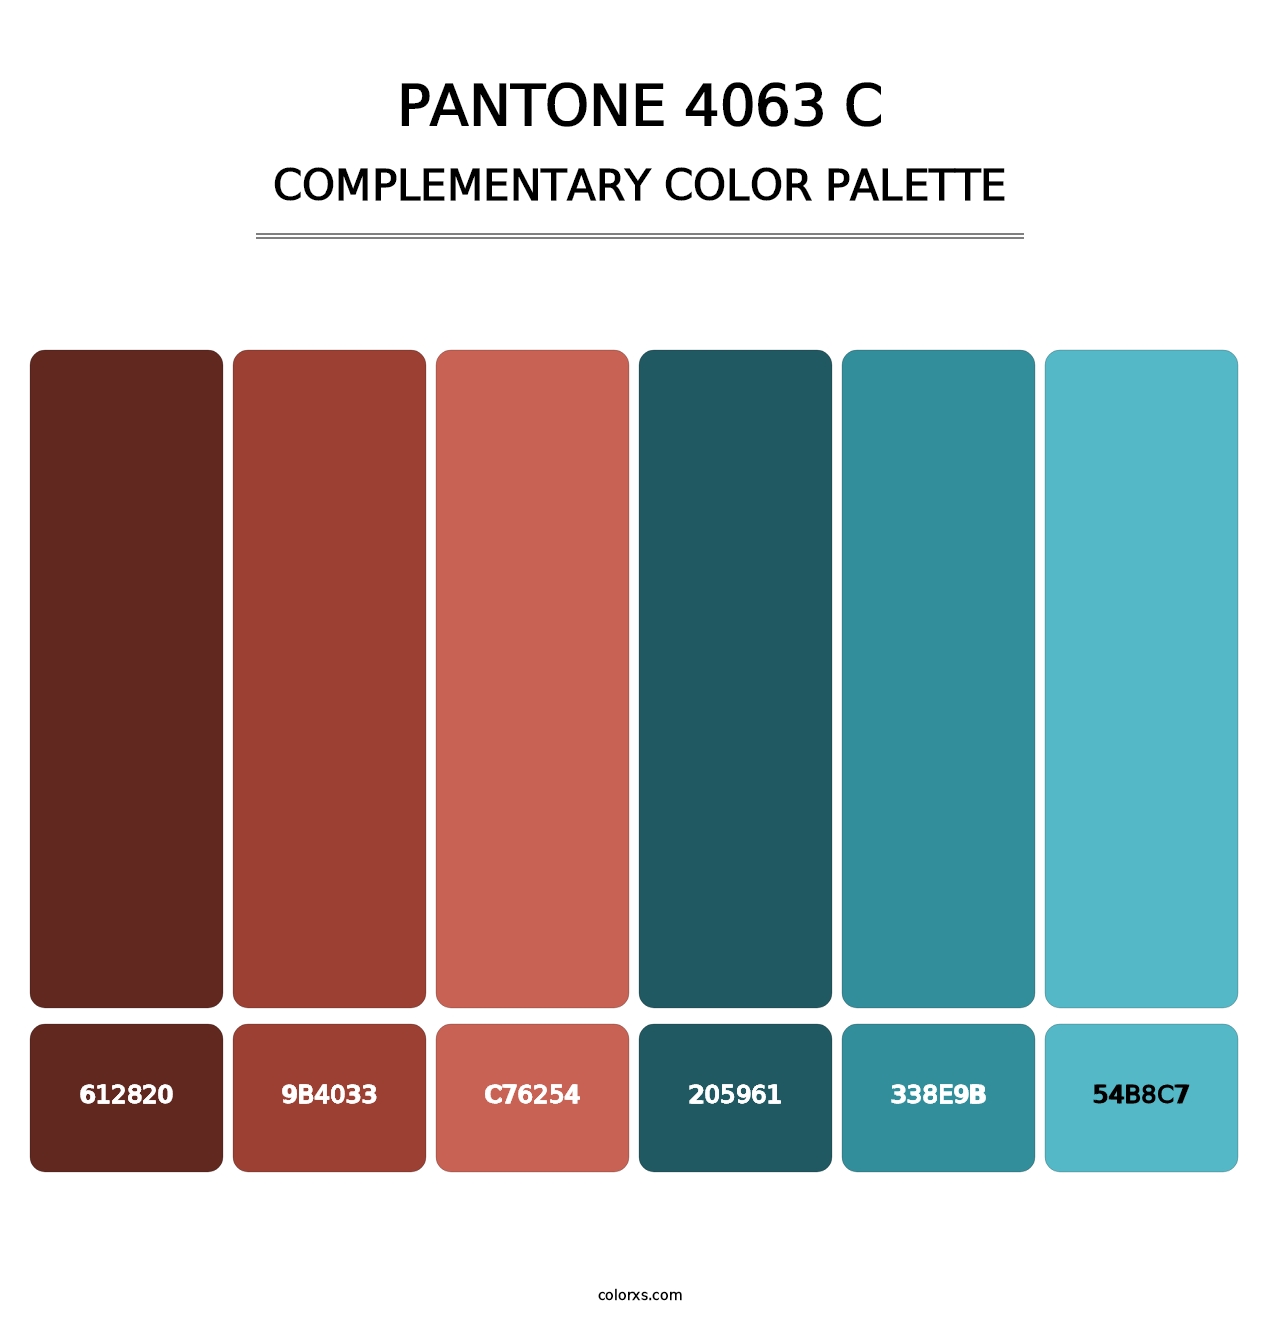 PANTONE 4063 C - Complementary Color Palette